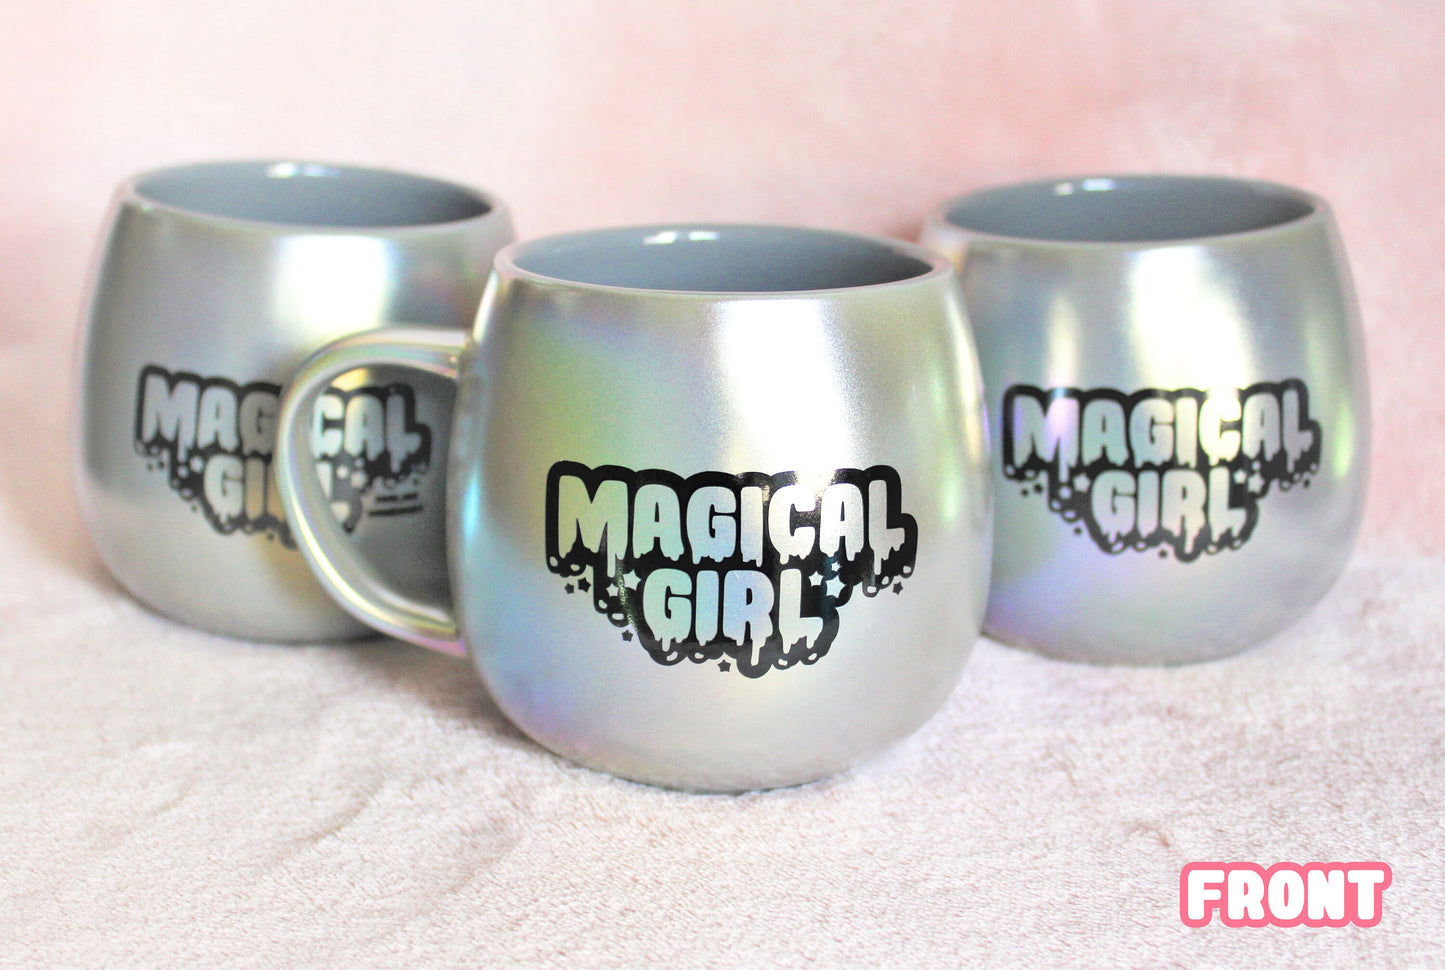 15 Ounce Coffee Mug B GRADE IMPERFECT Iridescent. Holographic Magical Girl Cup. Rainbow Sailor Moon. Drippy Punk Pastel Goth Mug. Kawaii